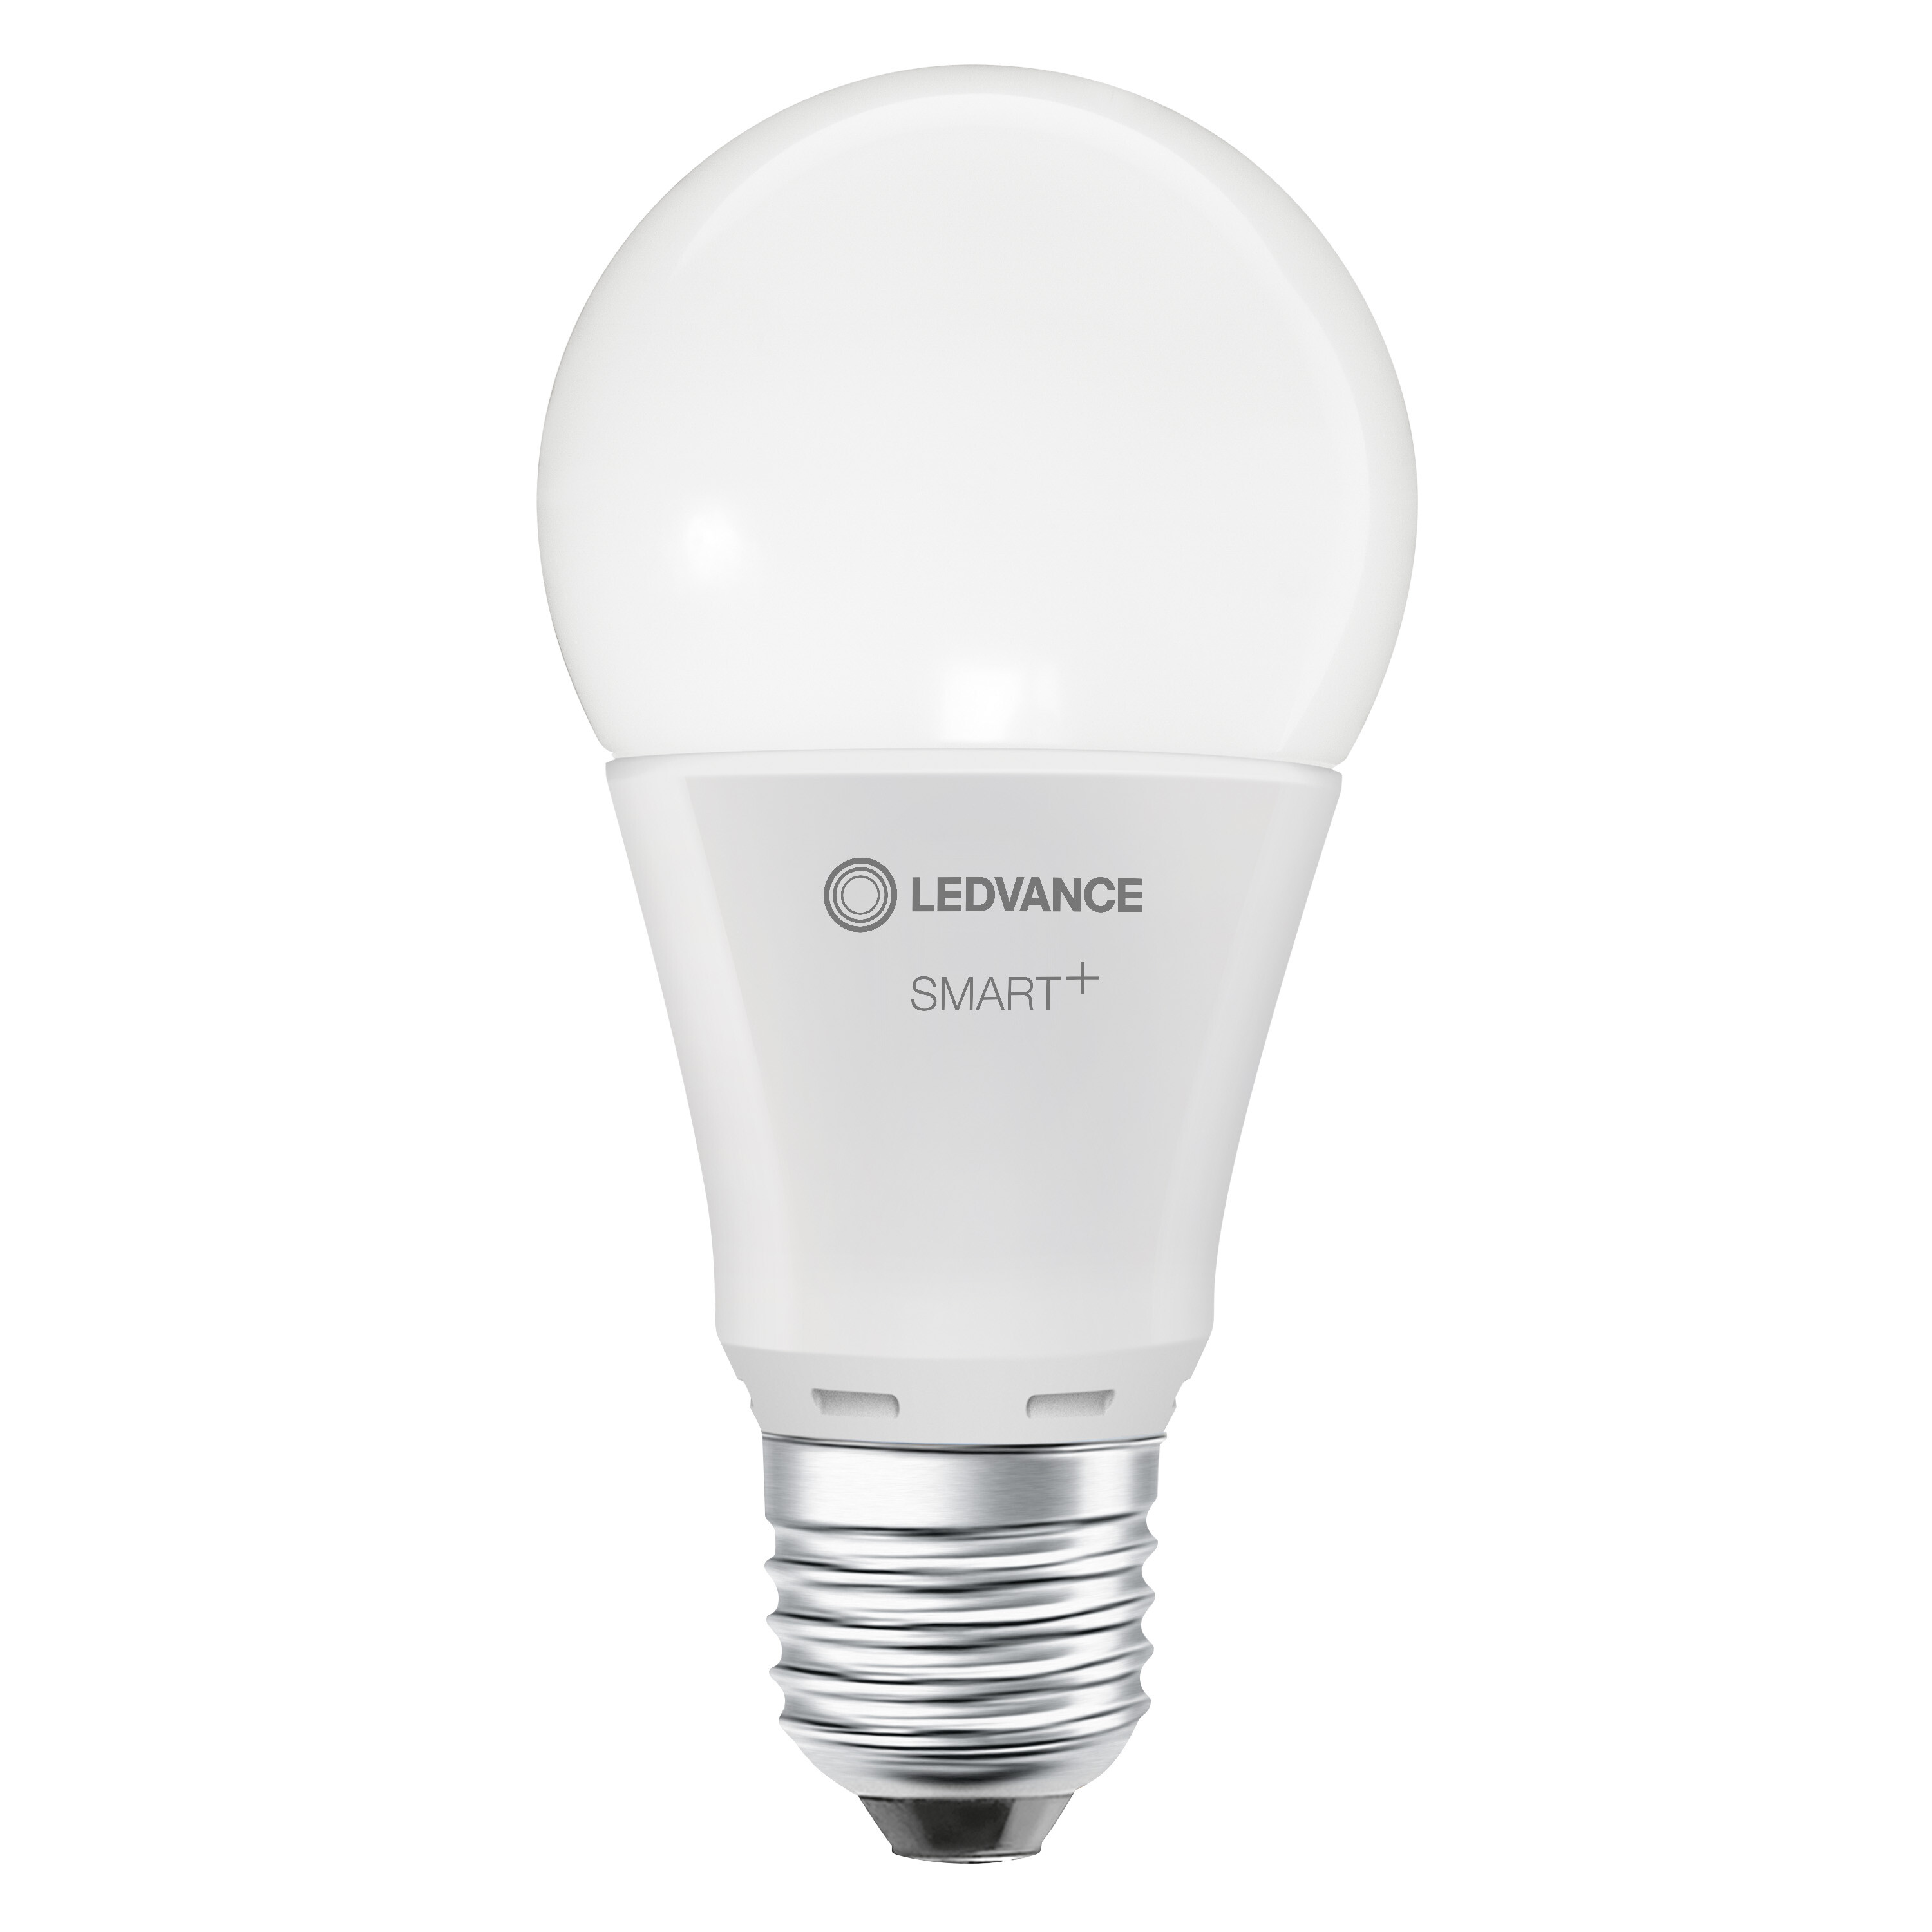 Classic White änderbar Tunable WiFi LED LEDVANCE SMART+ Lichtfarbe Lampe